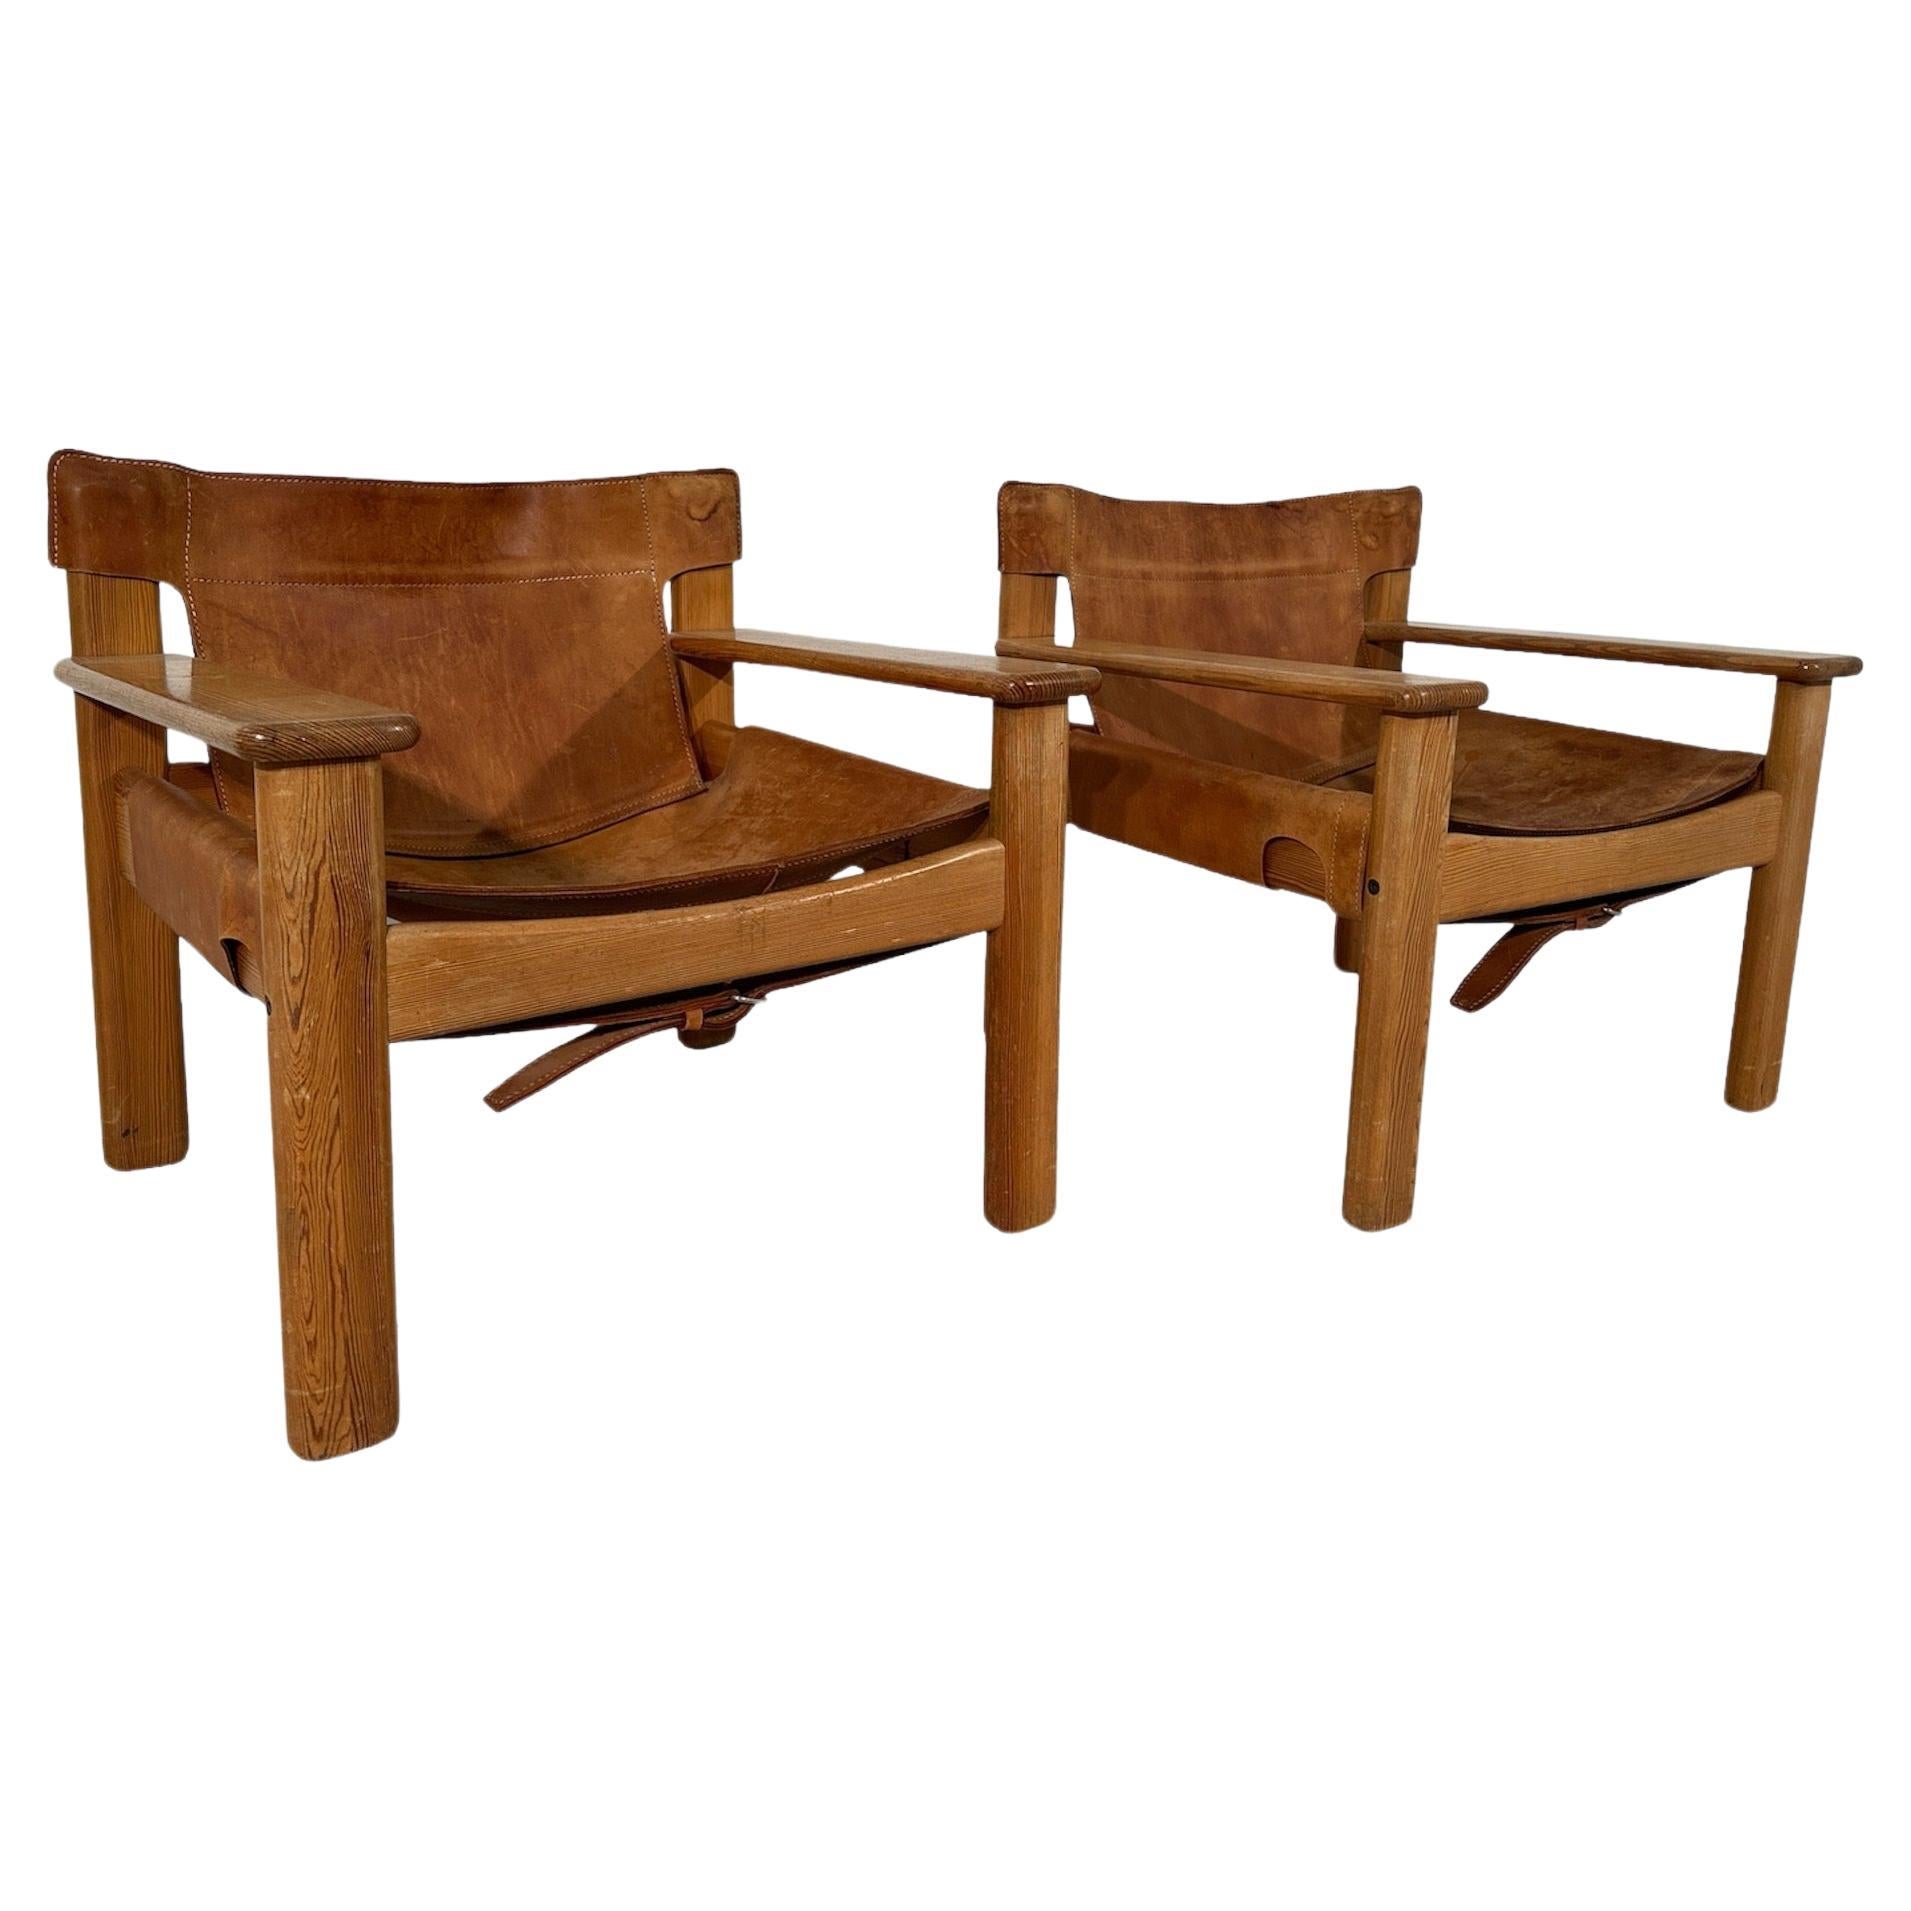 Set of 2 Vintage Italian Wood and Leather Safari Chairs 1970s